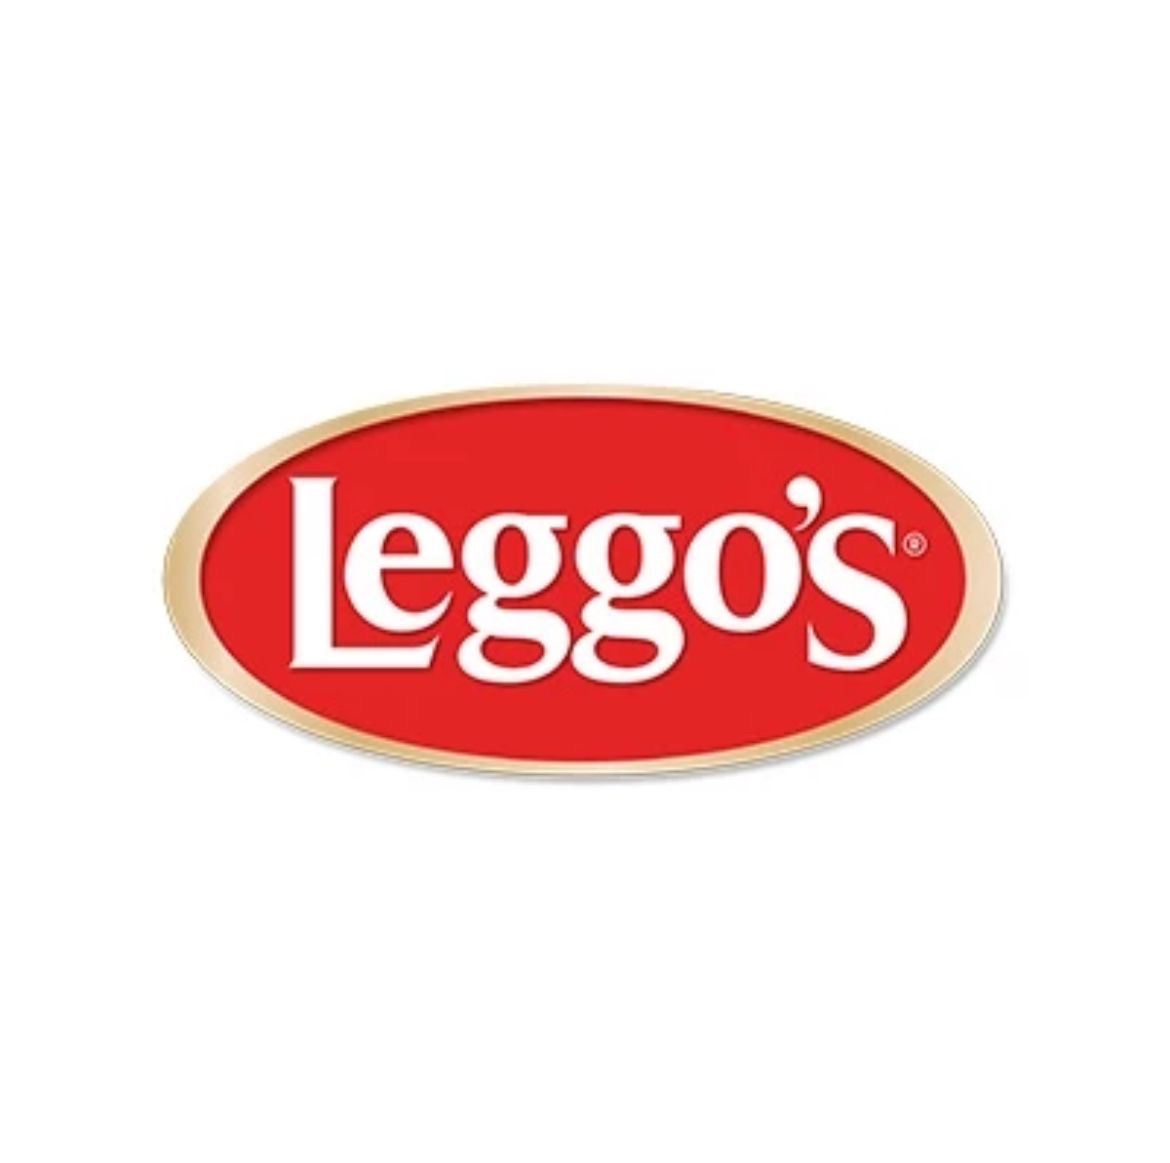 Leggo's